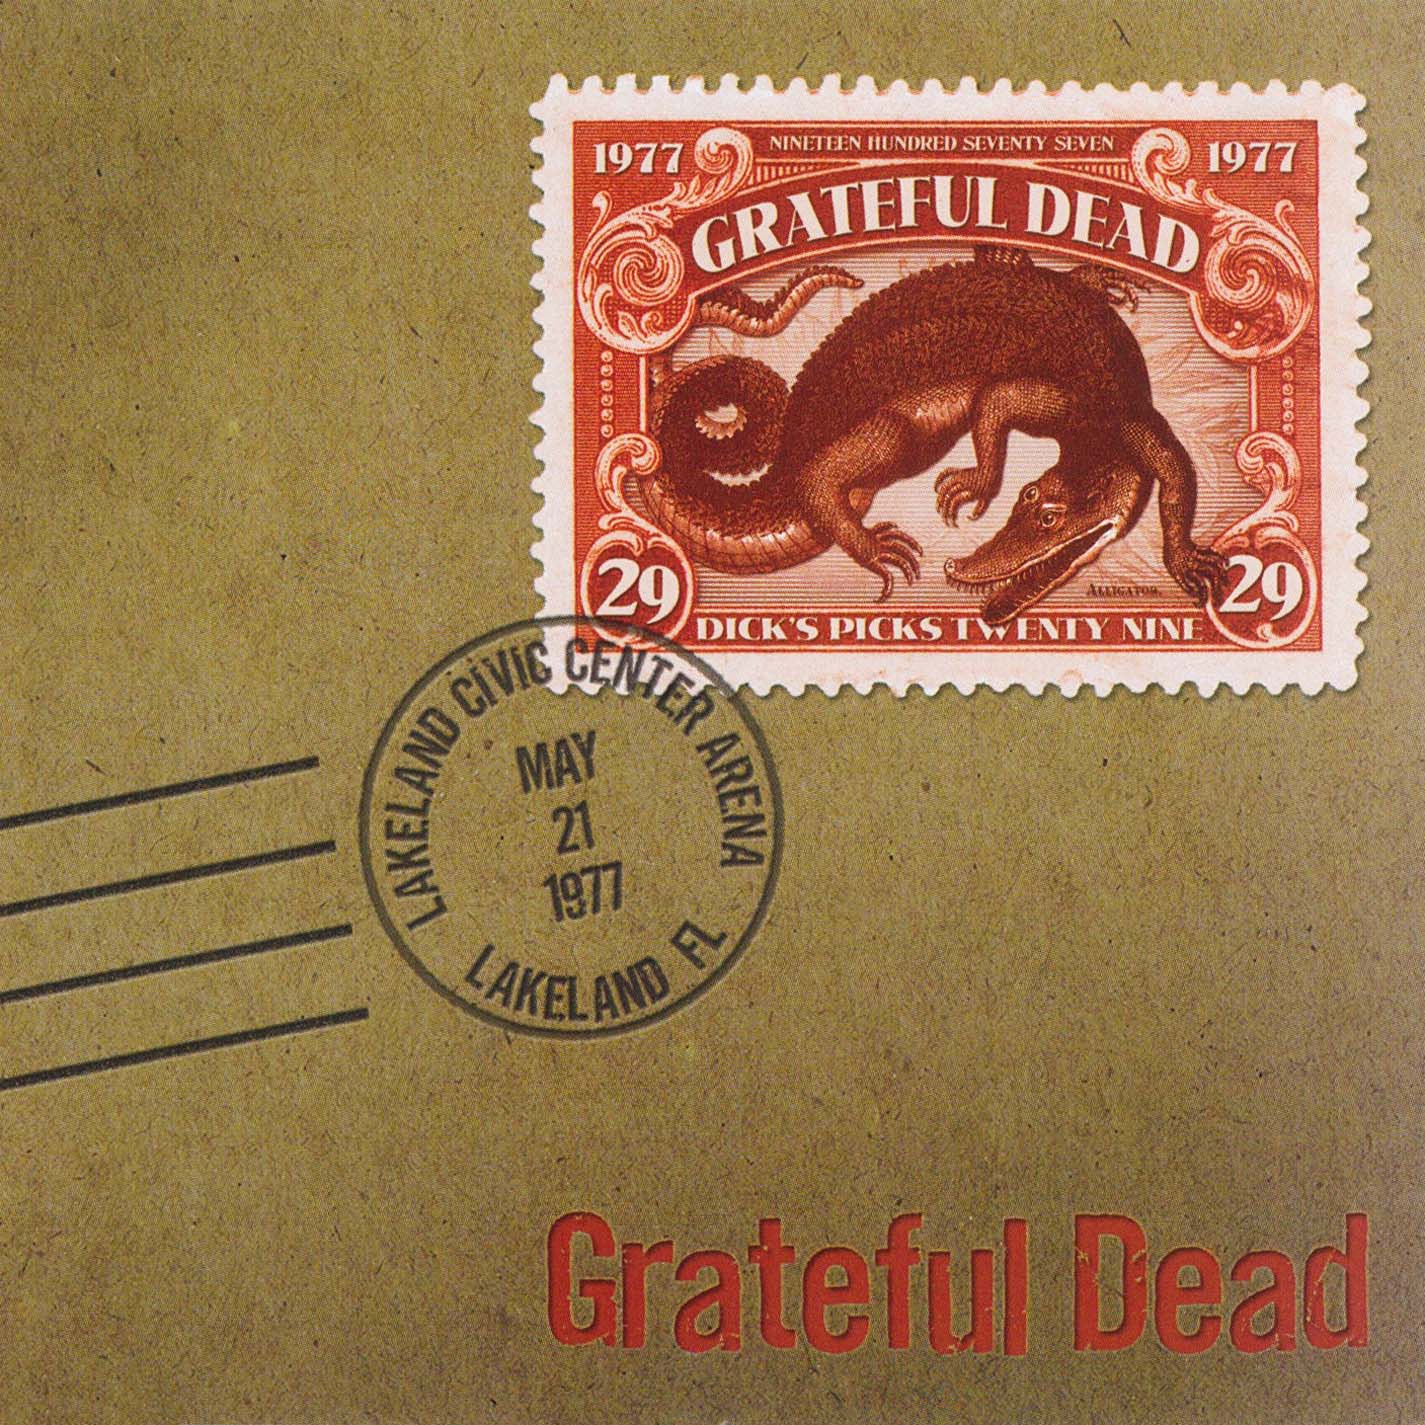 Grateful Dead Dick's Picks 29 album cover artwork